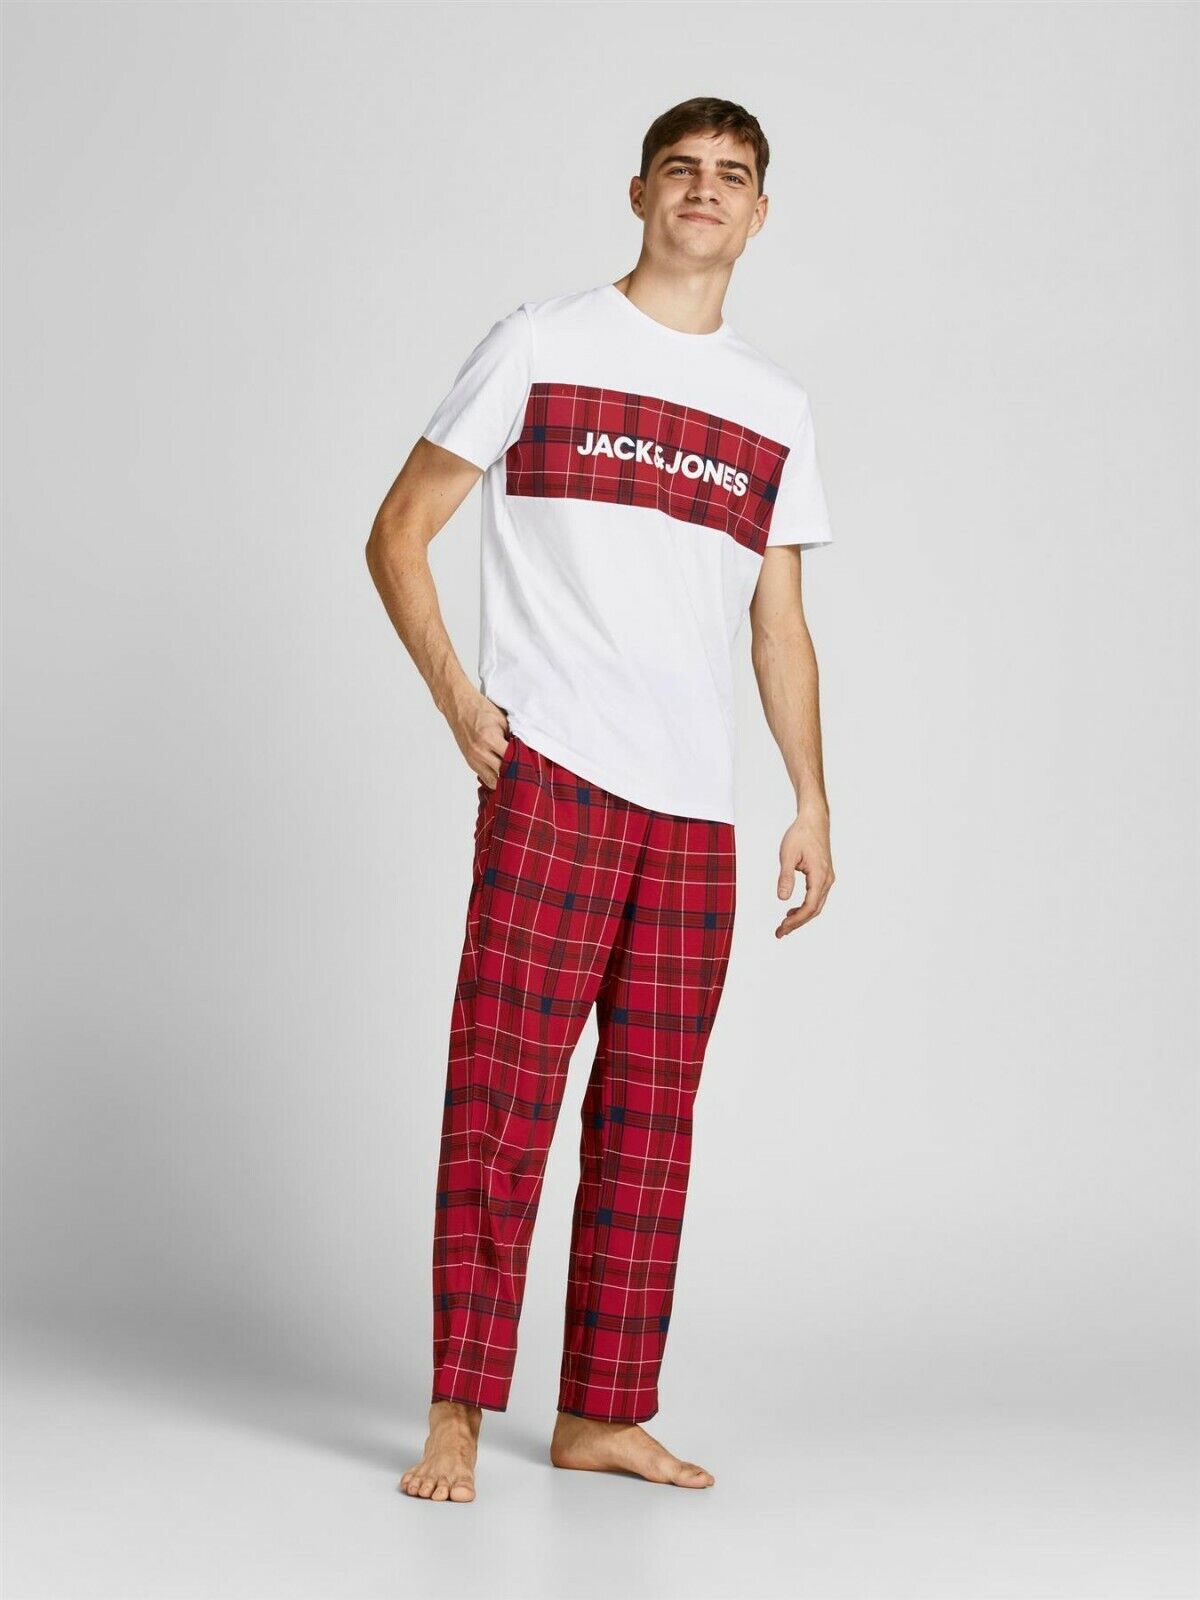 Mens Pyjamas Jack Jones Loungewear Set Night Suit PJ Sleepwear Top Bottom S-2XL